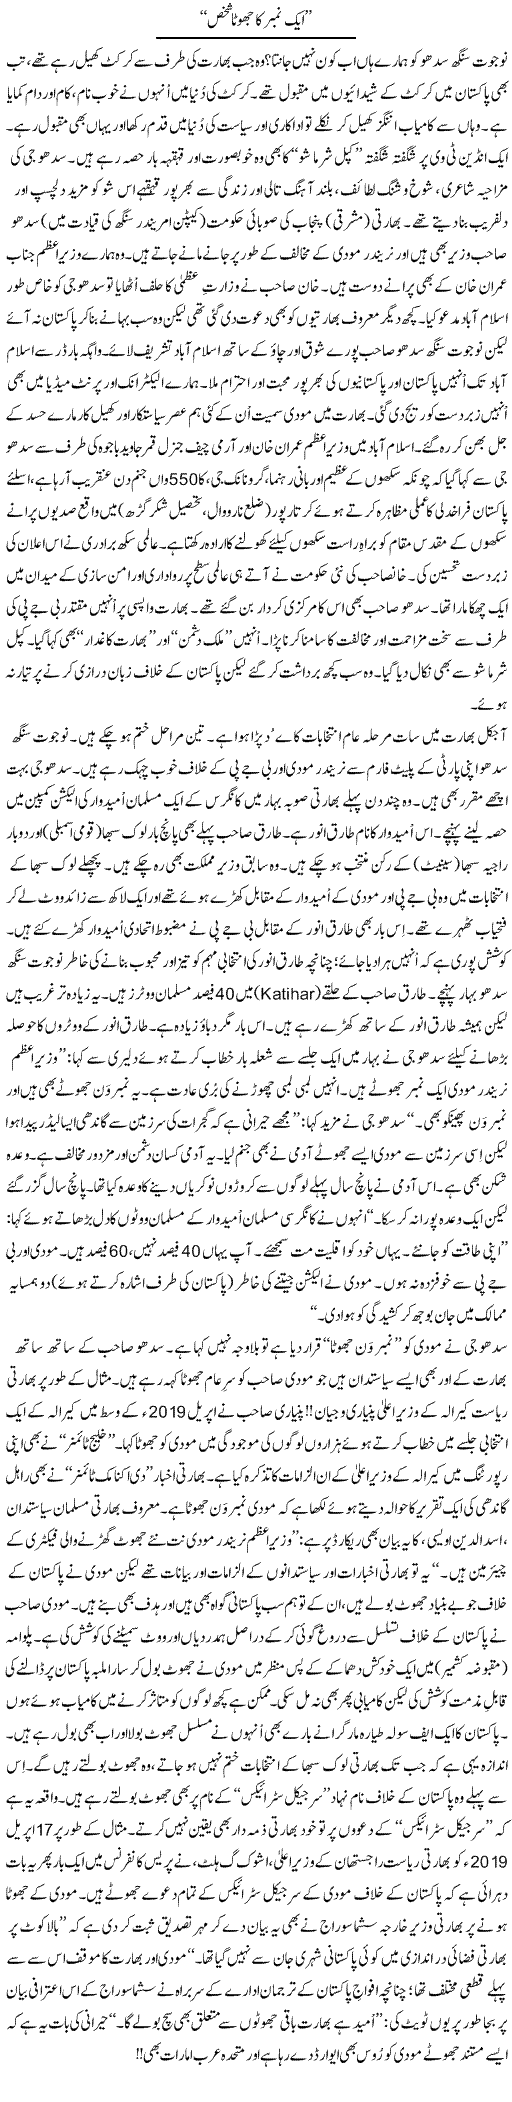 Aik Number Ka Jhoota Shakhs | Tanveer Qaisar Shahid | Daily Urdu Columns